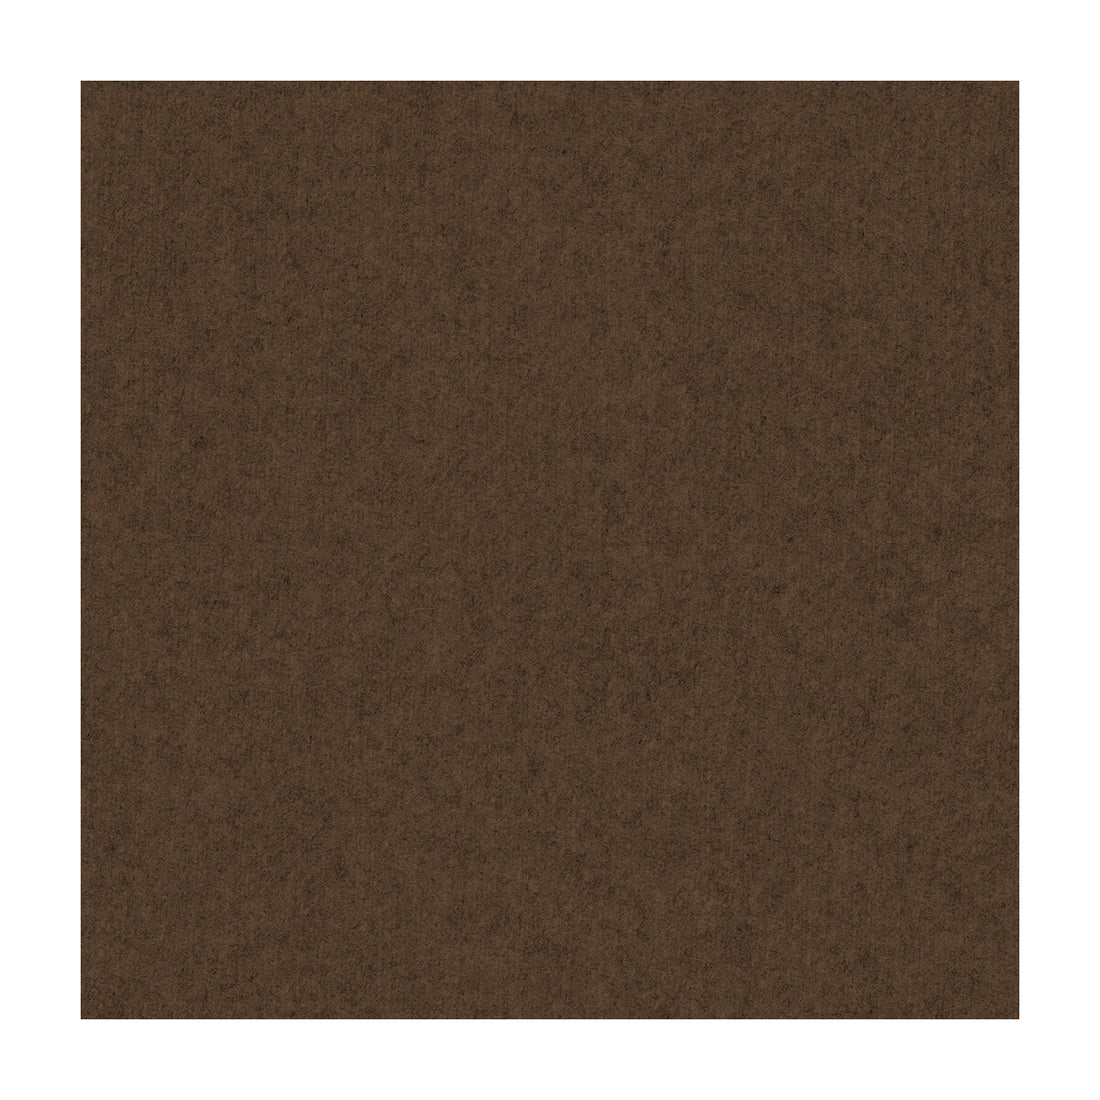 Jefferson Wool fabric in walnut color - pattern 34397.6.0 - by Kravet Contract